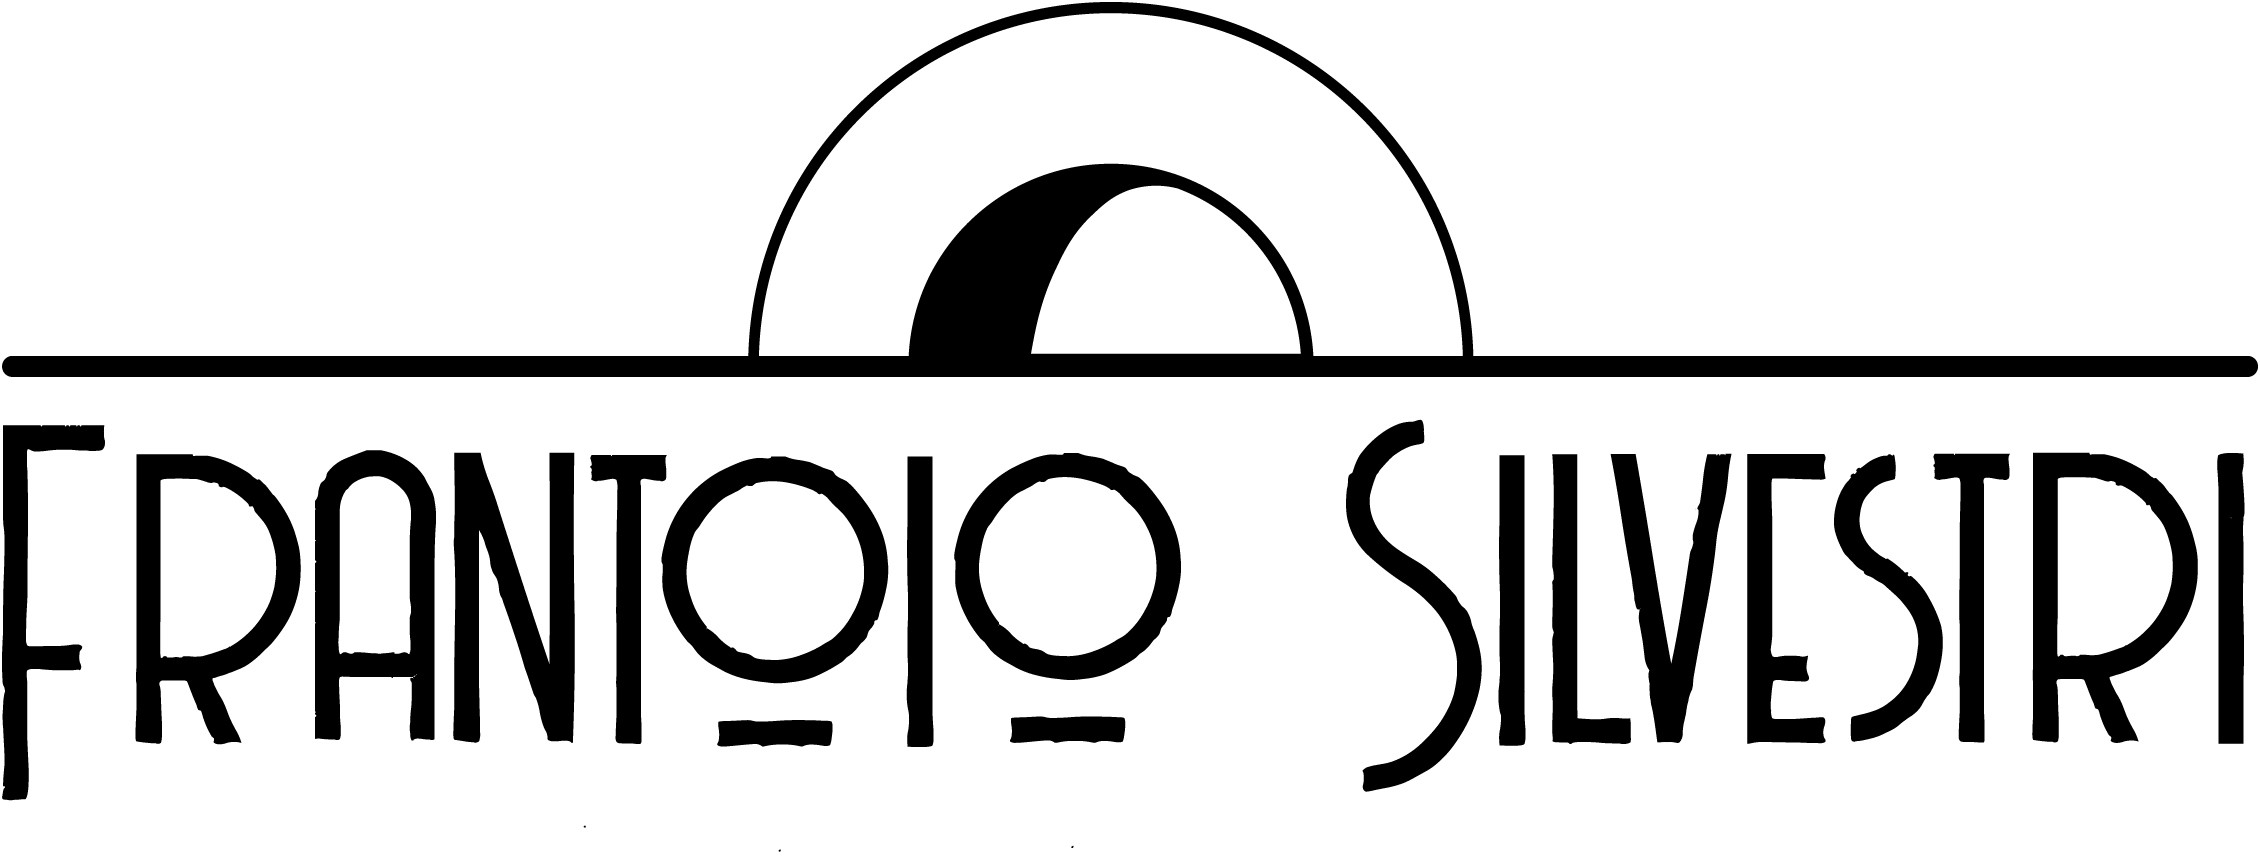 Frantoio Silvestri logo